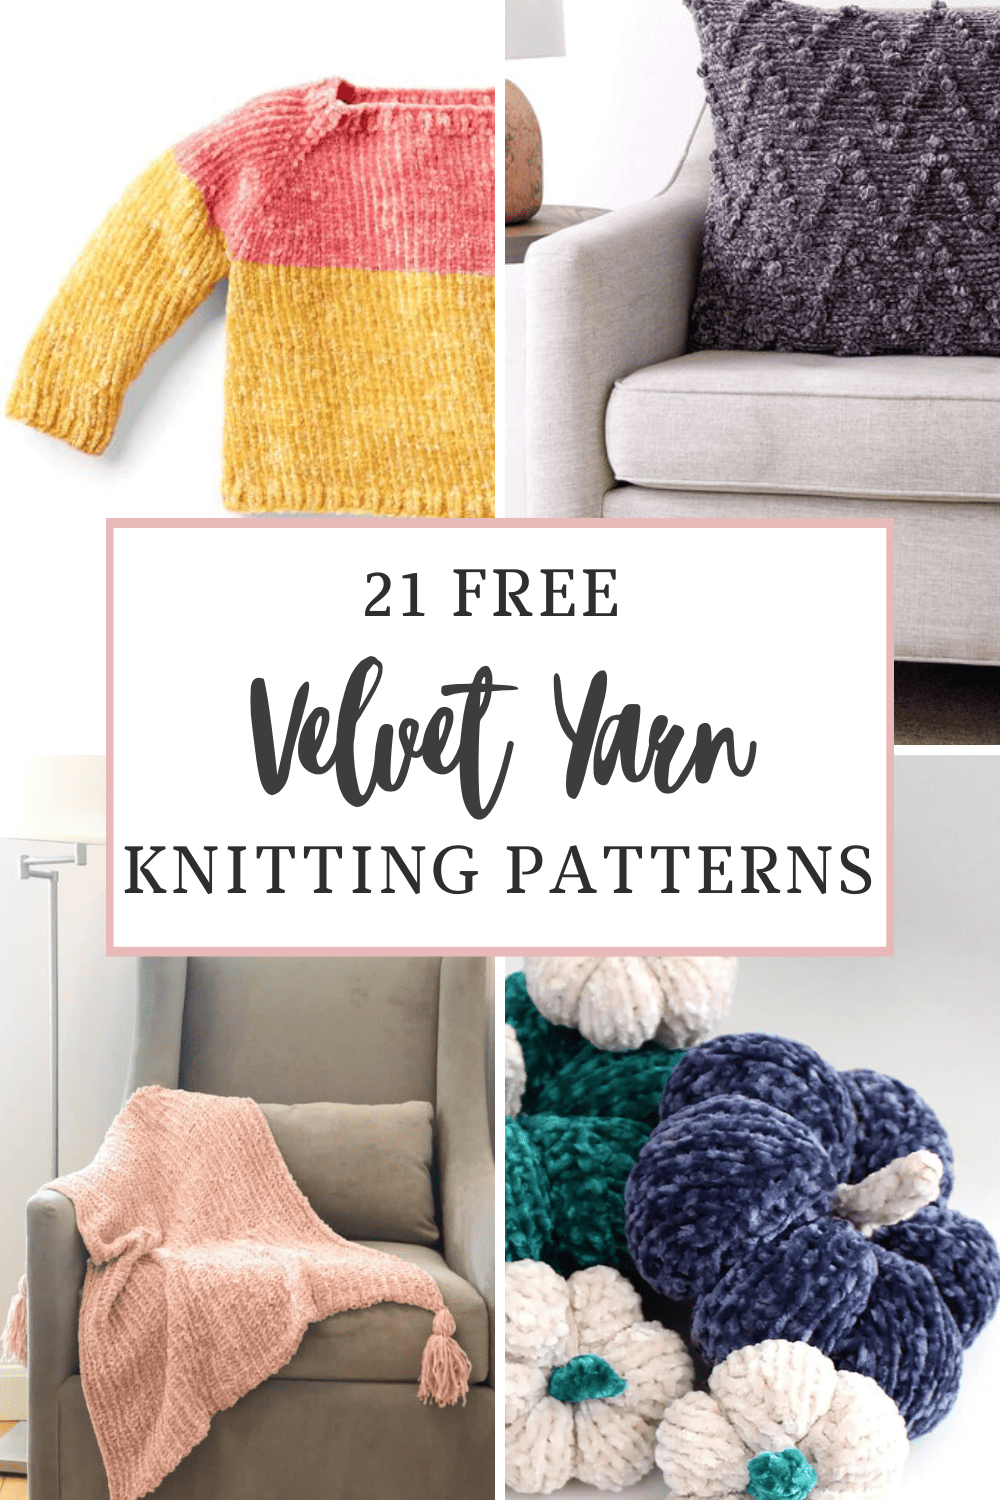 21 Snuggly & Free Velvet Yarn Knitting Patterns